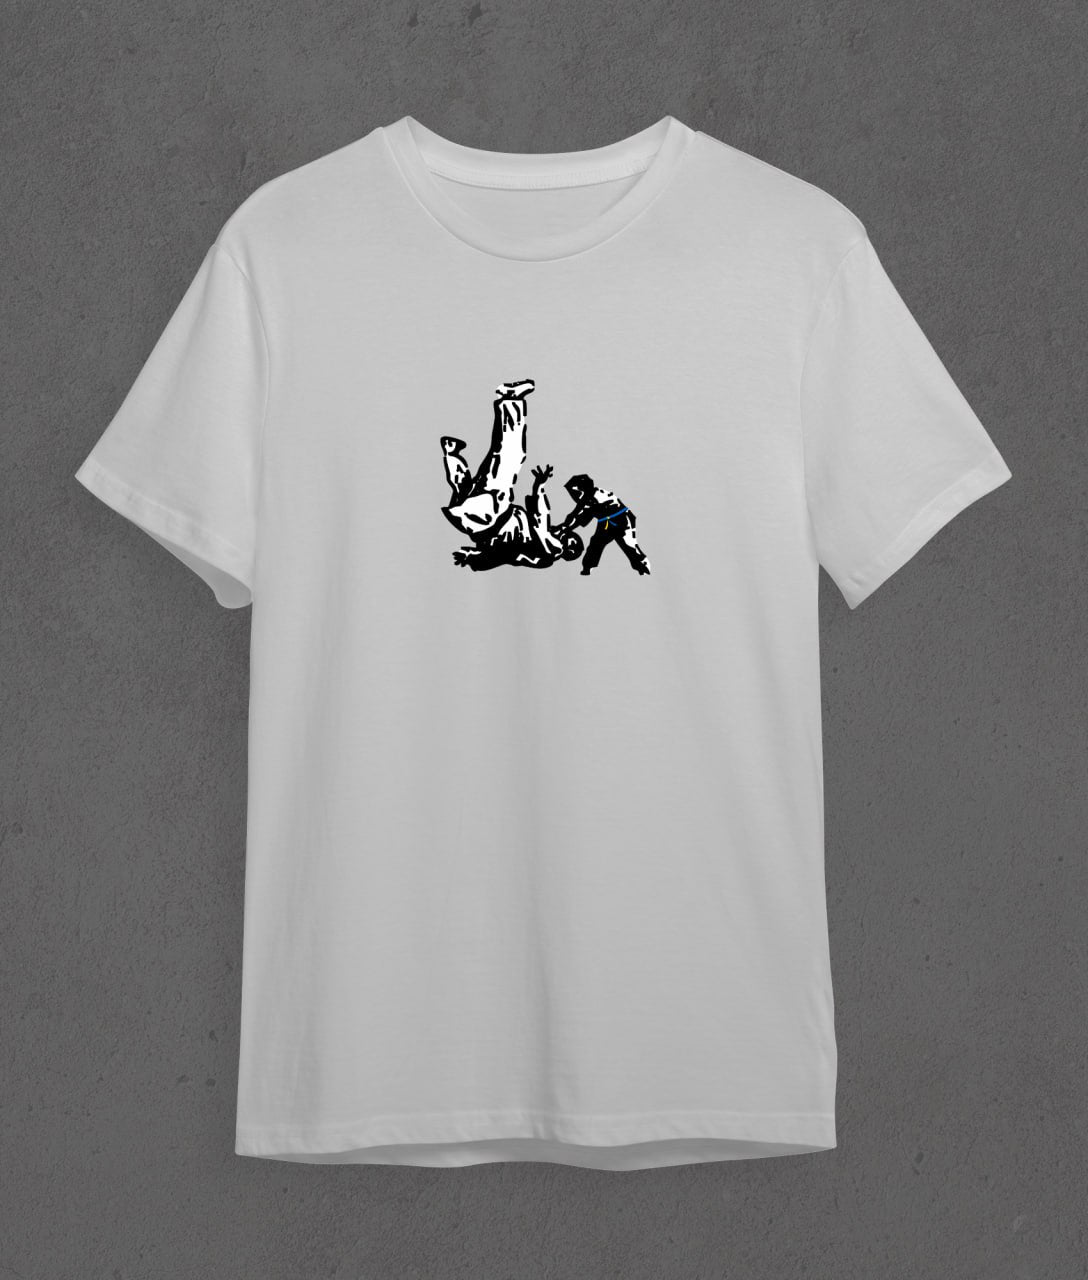 T-shirt Judo (Banksy)